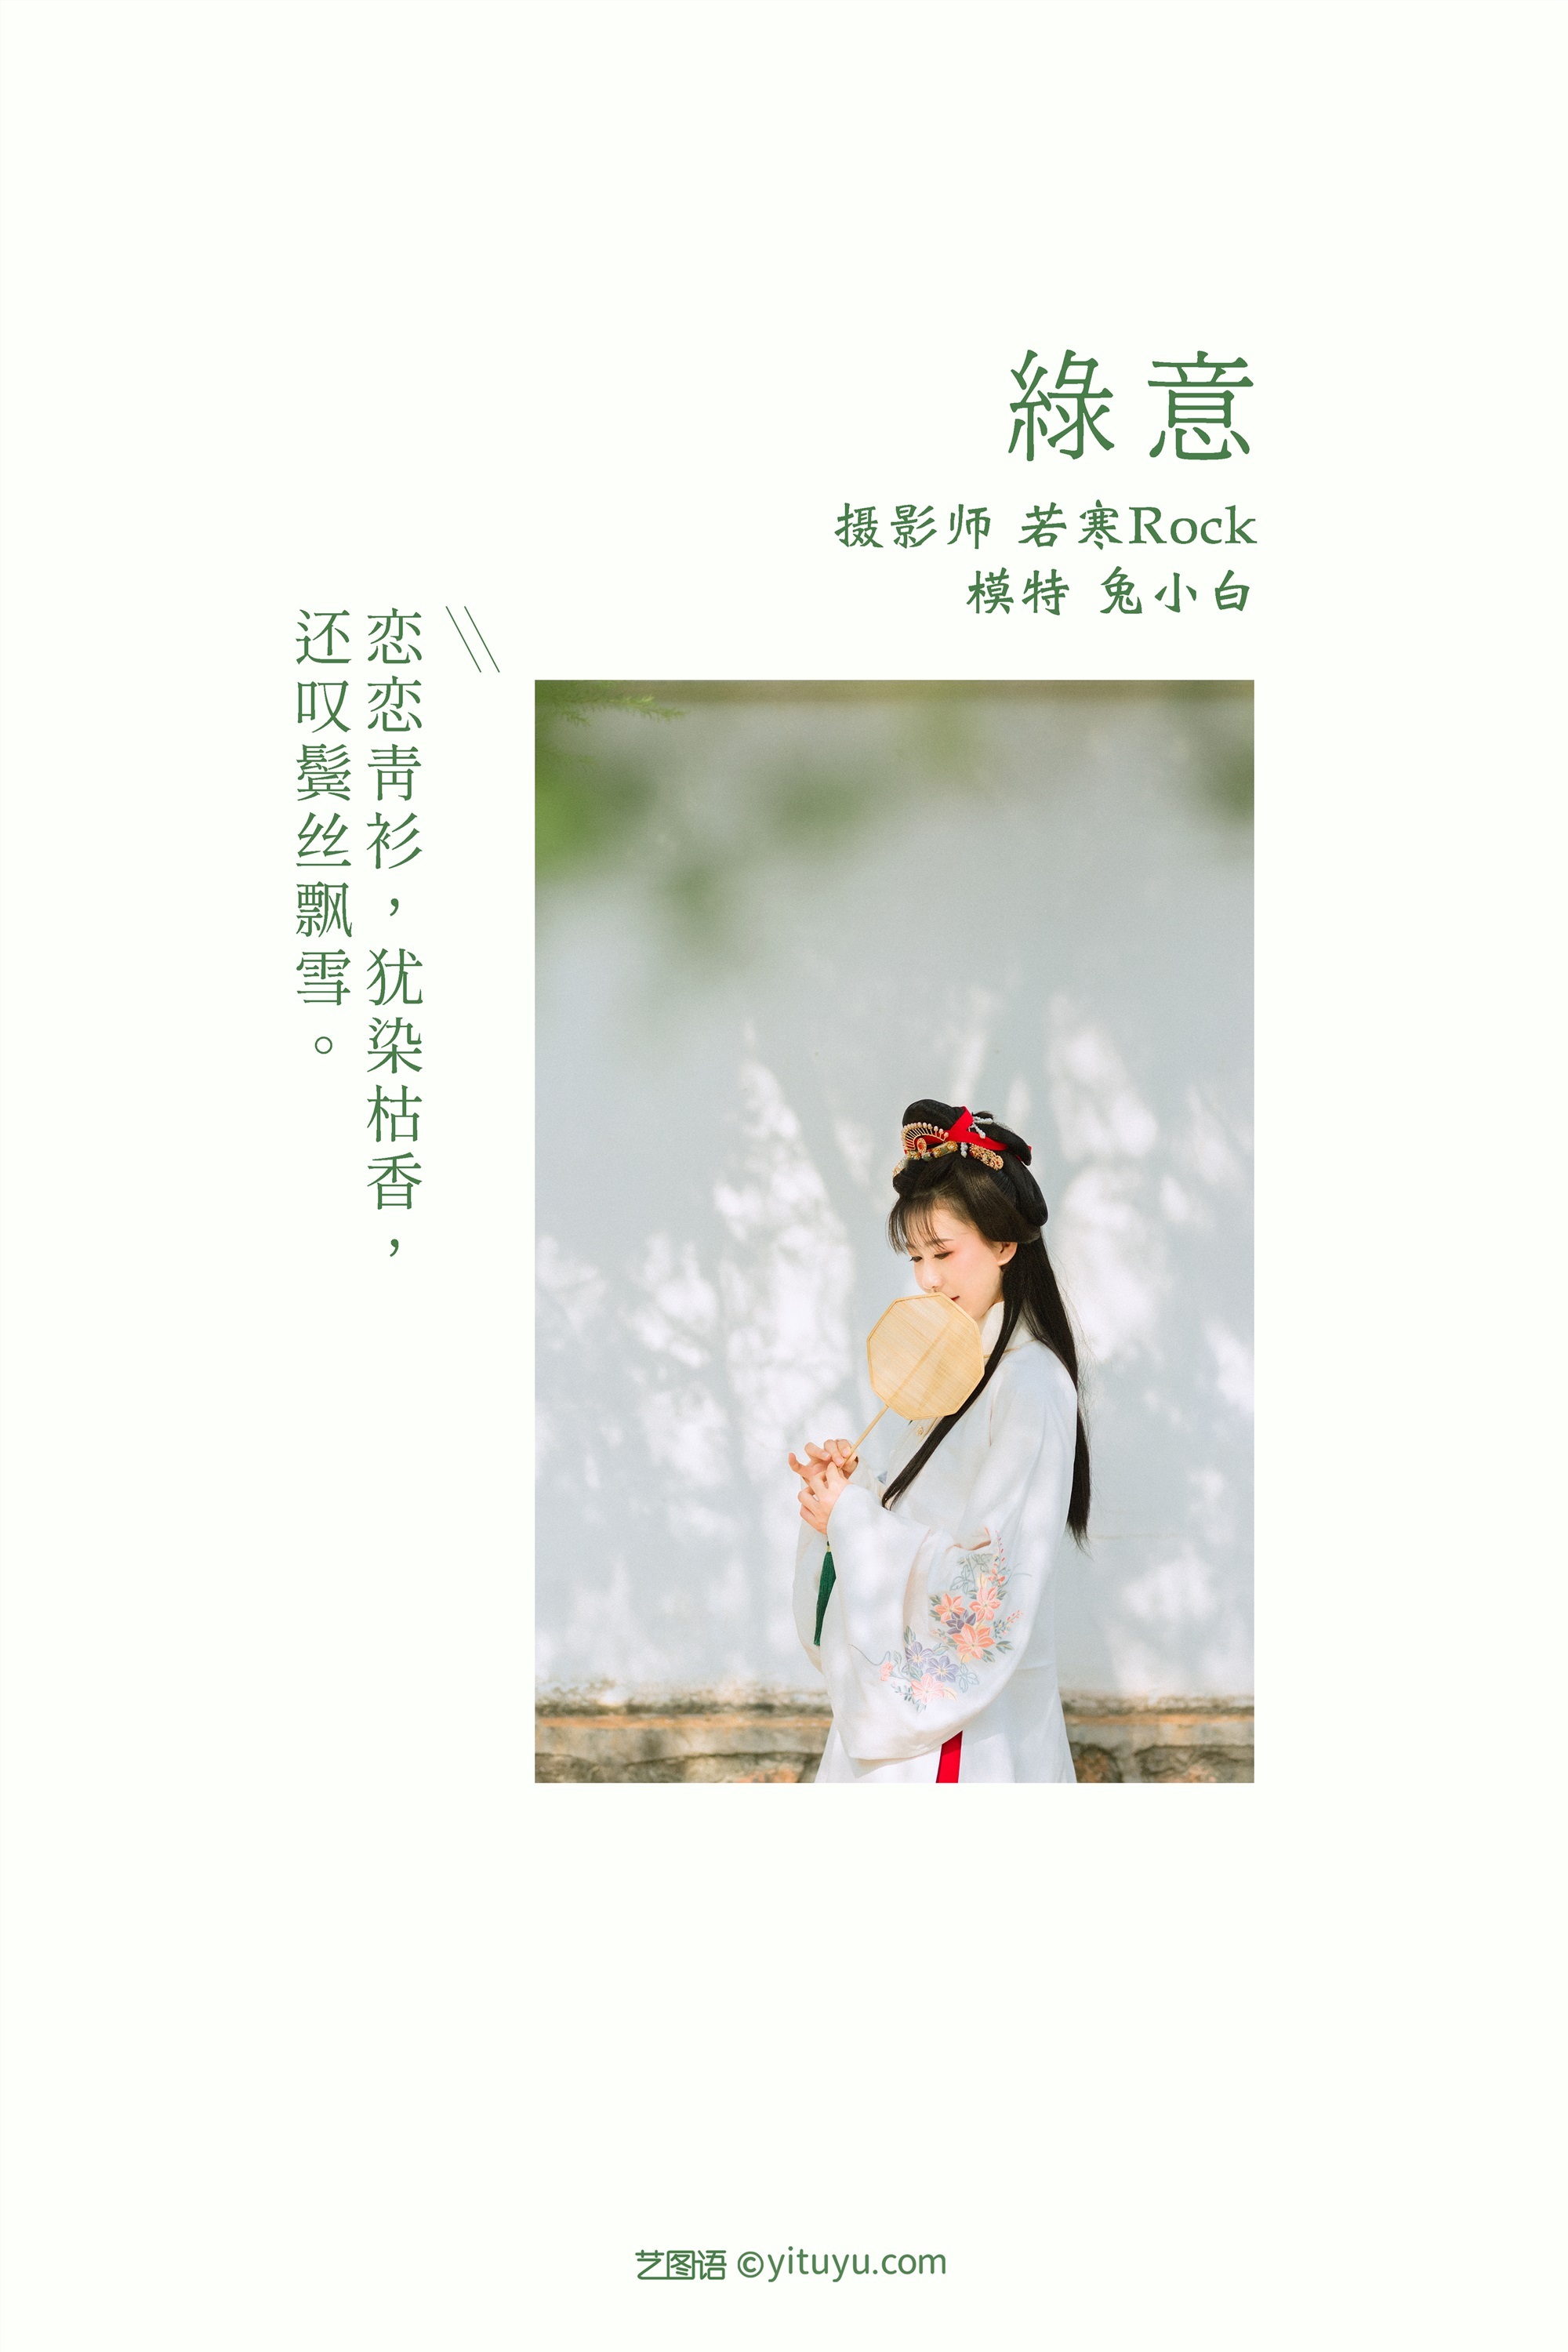 YITUYU Art Picture Language 2021.09.04 Green Rabbit Little White